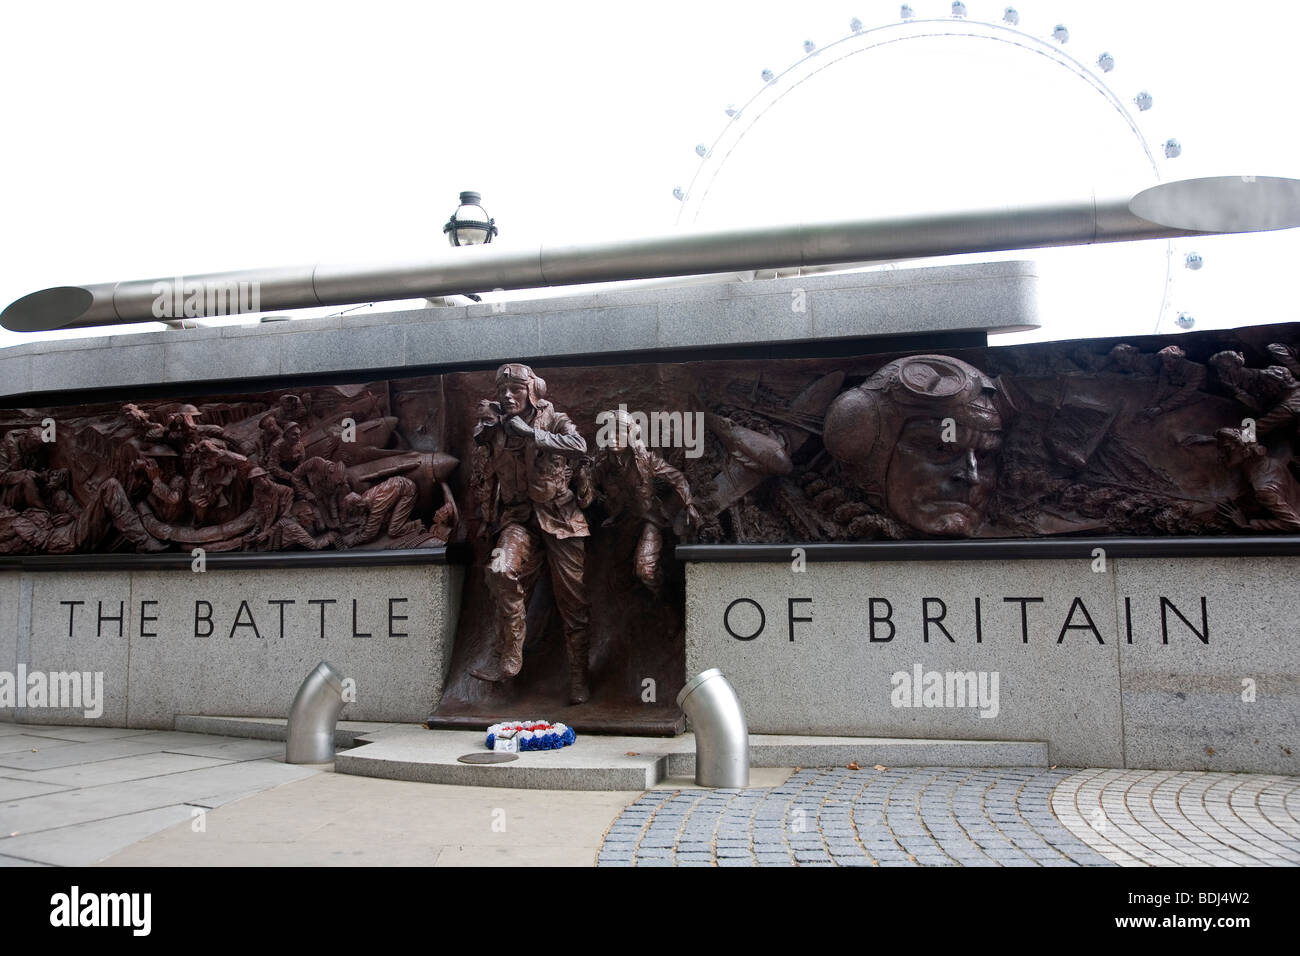 Battle of Britain monument - London Embankment  - Stock Photo